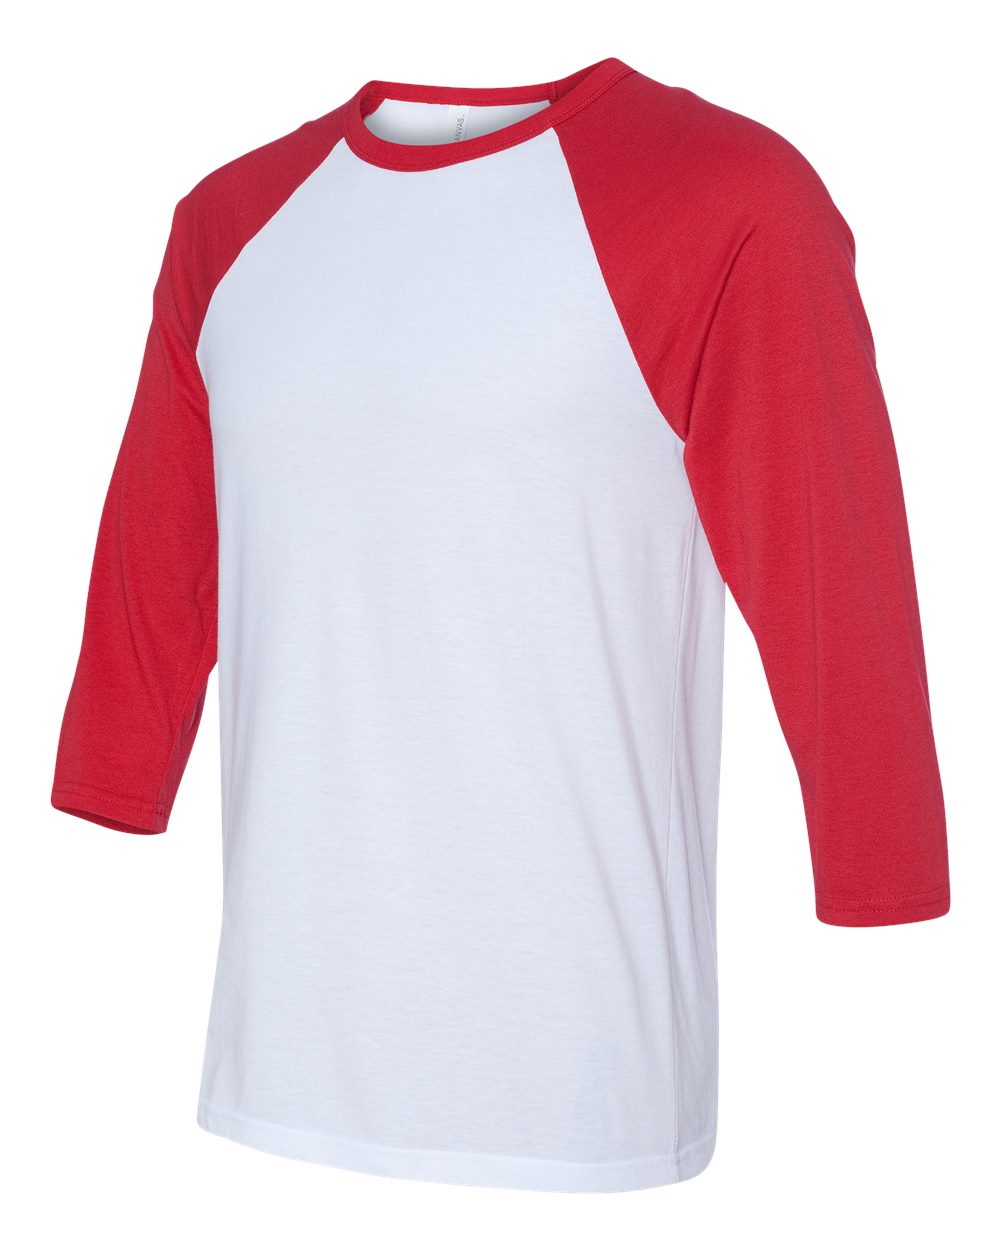 red n white shirt